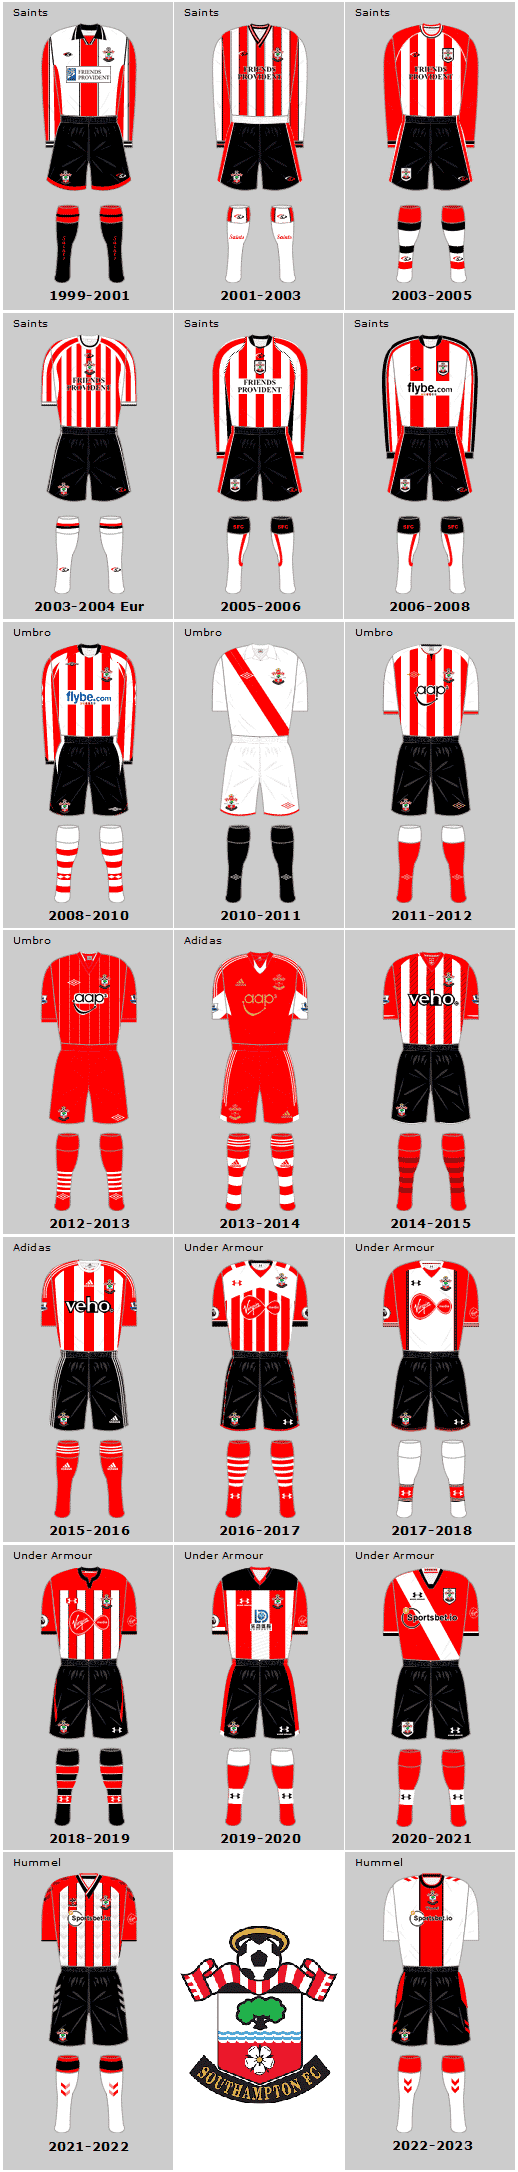 Southampton FC 21st Century Home Playing Kits